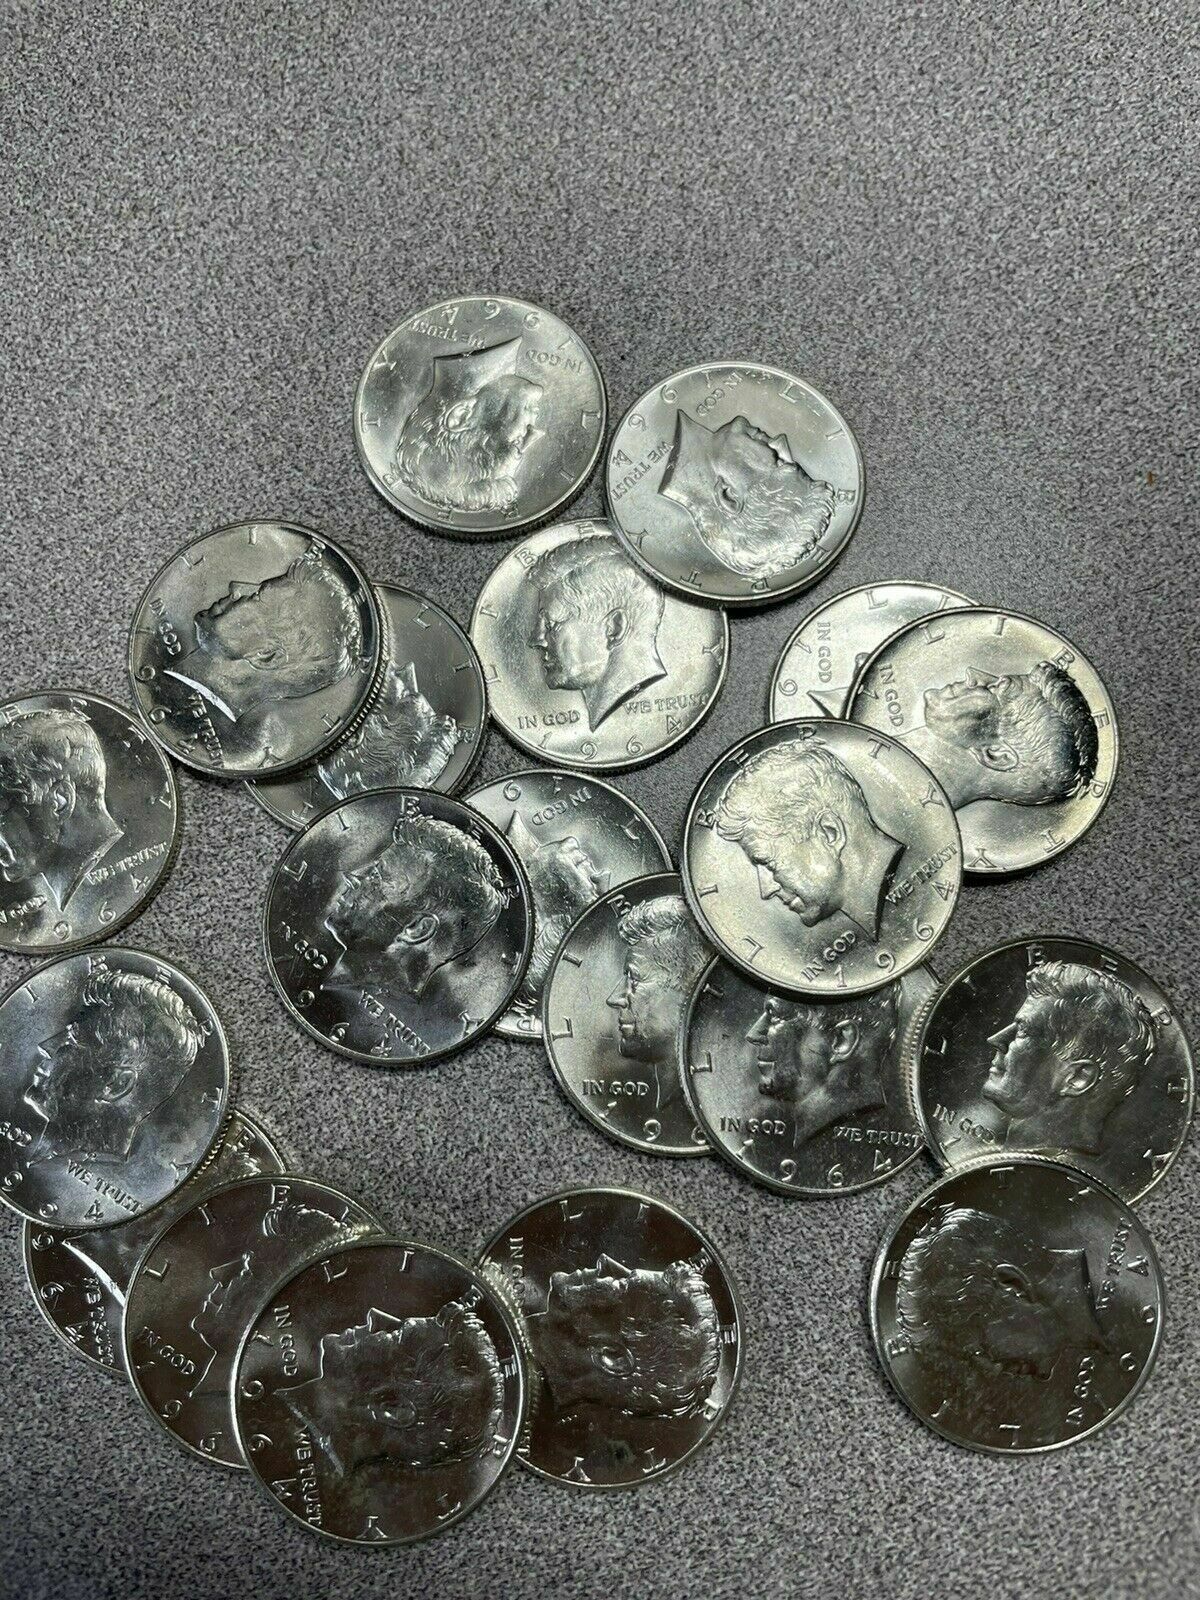 20 BU 1964 Kennedy Half UNC Dollars - 1 Roll of Uncirculated Halves -50c Coins